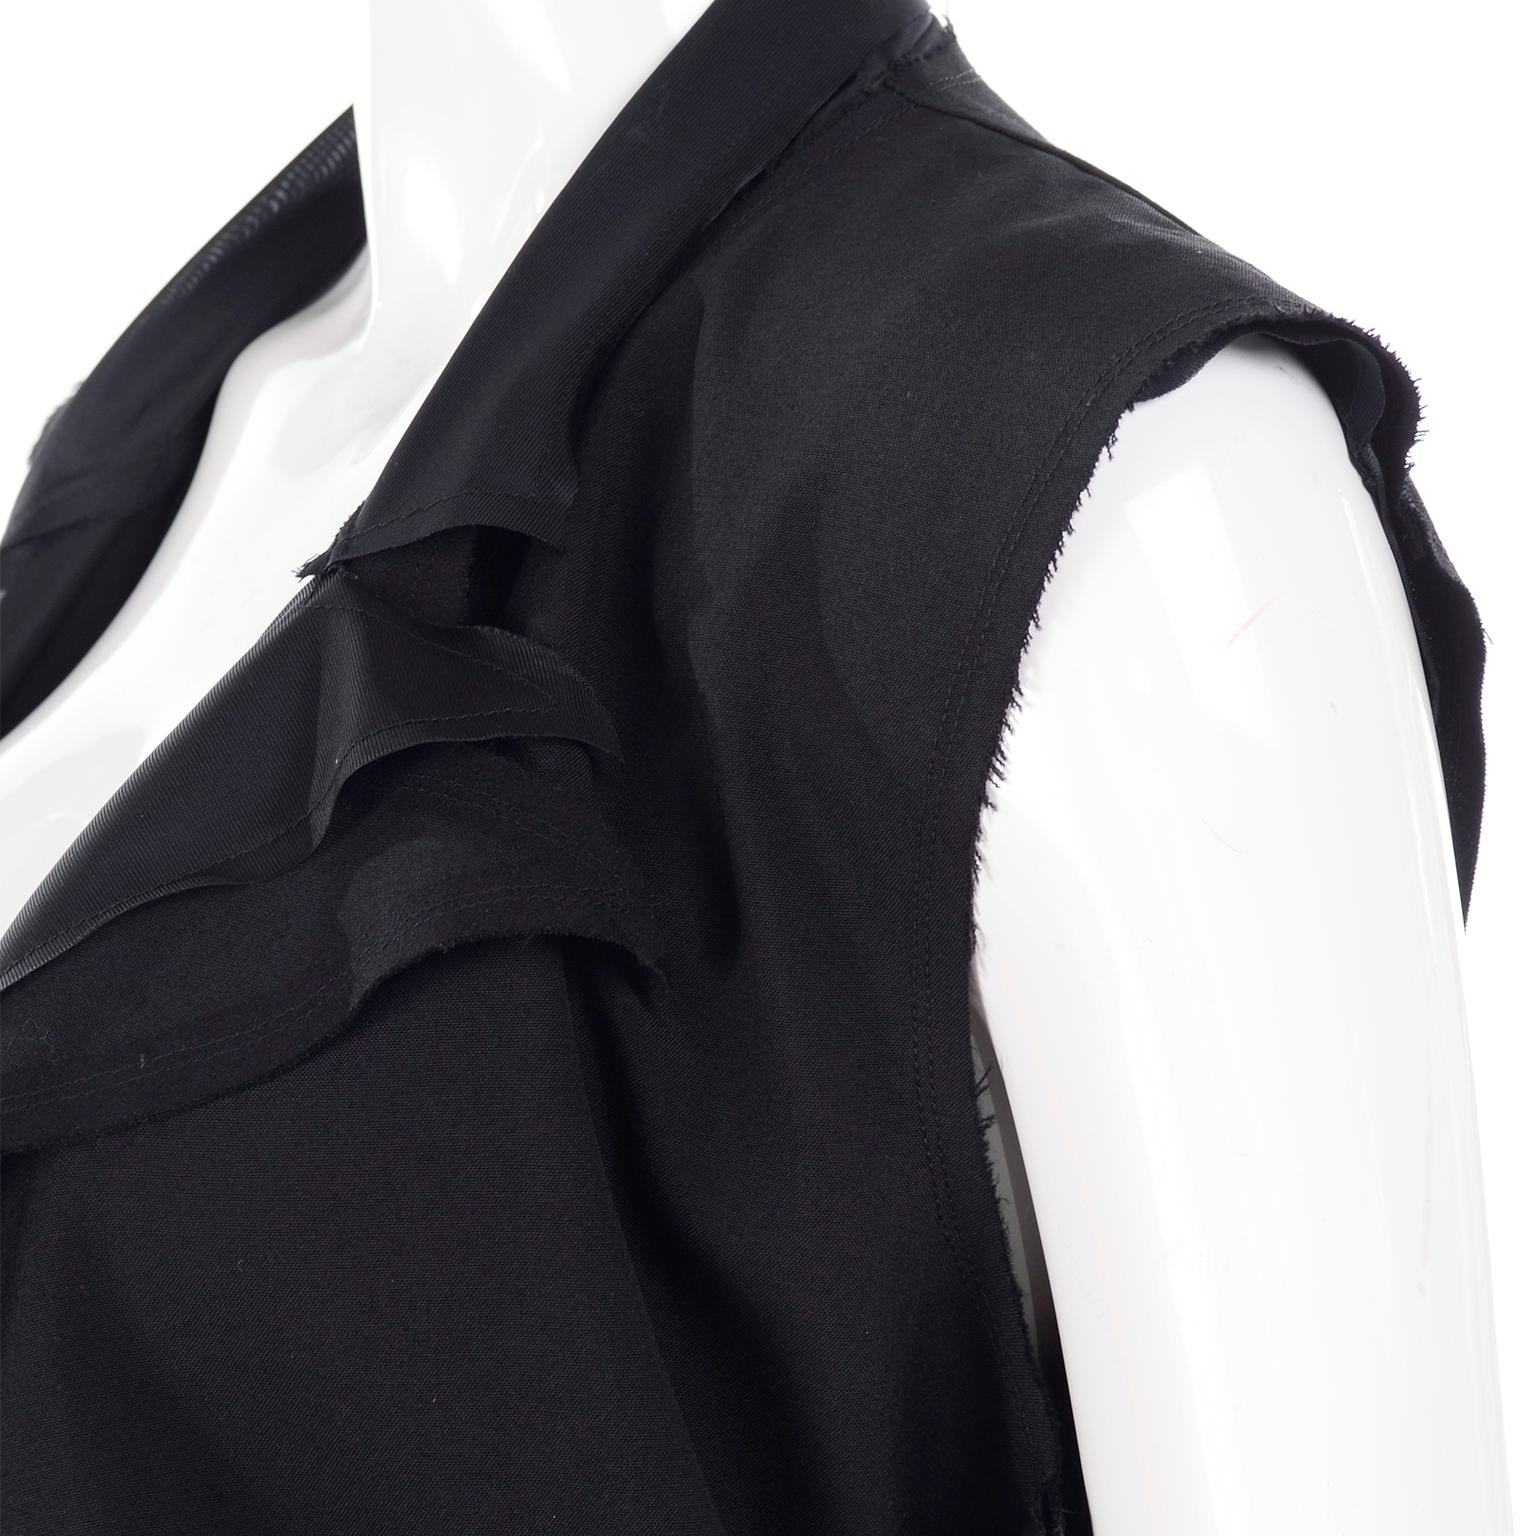 Black Wool Comme des Garcons Vest / Gilet Layered & Deconstructed w/ Raw Edges 1